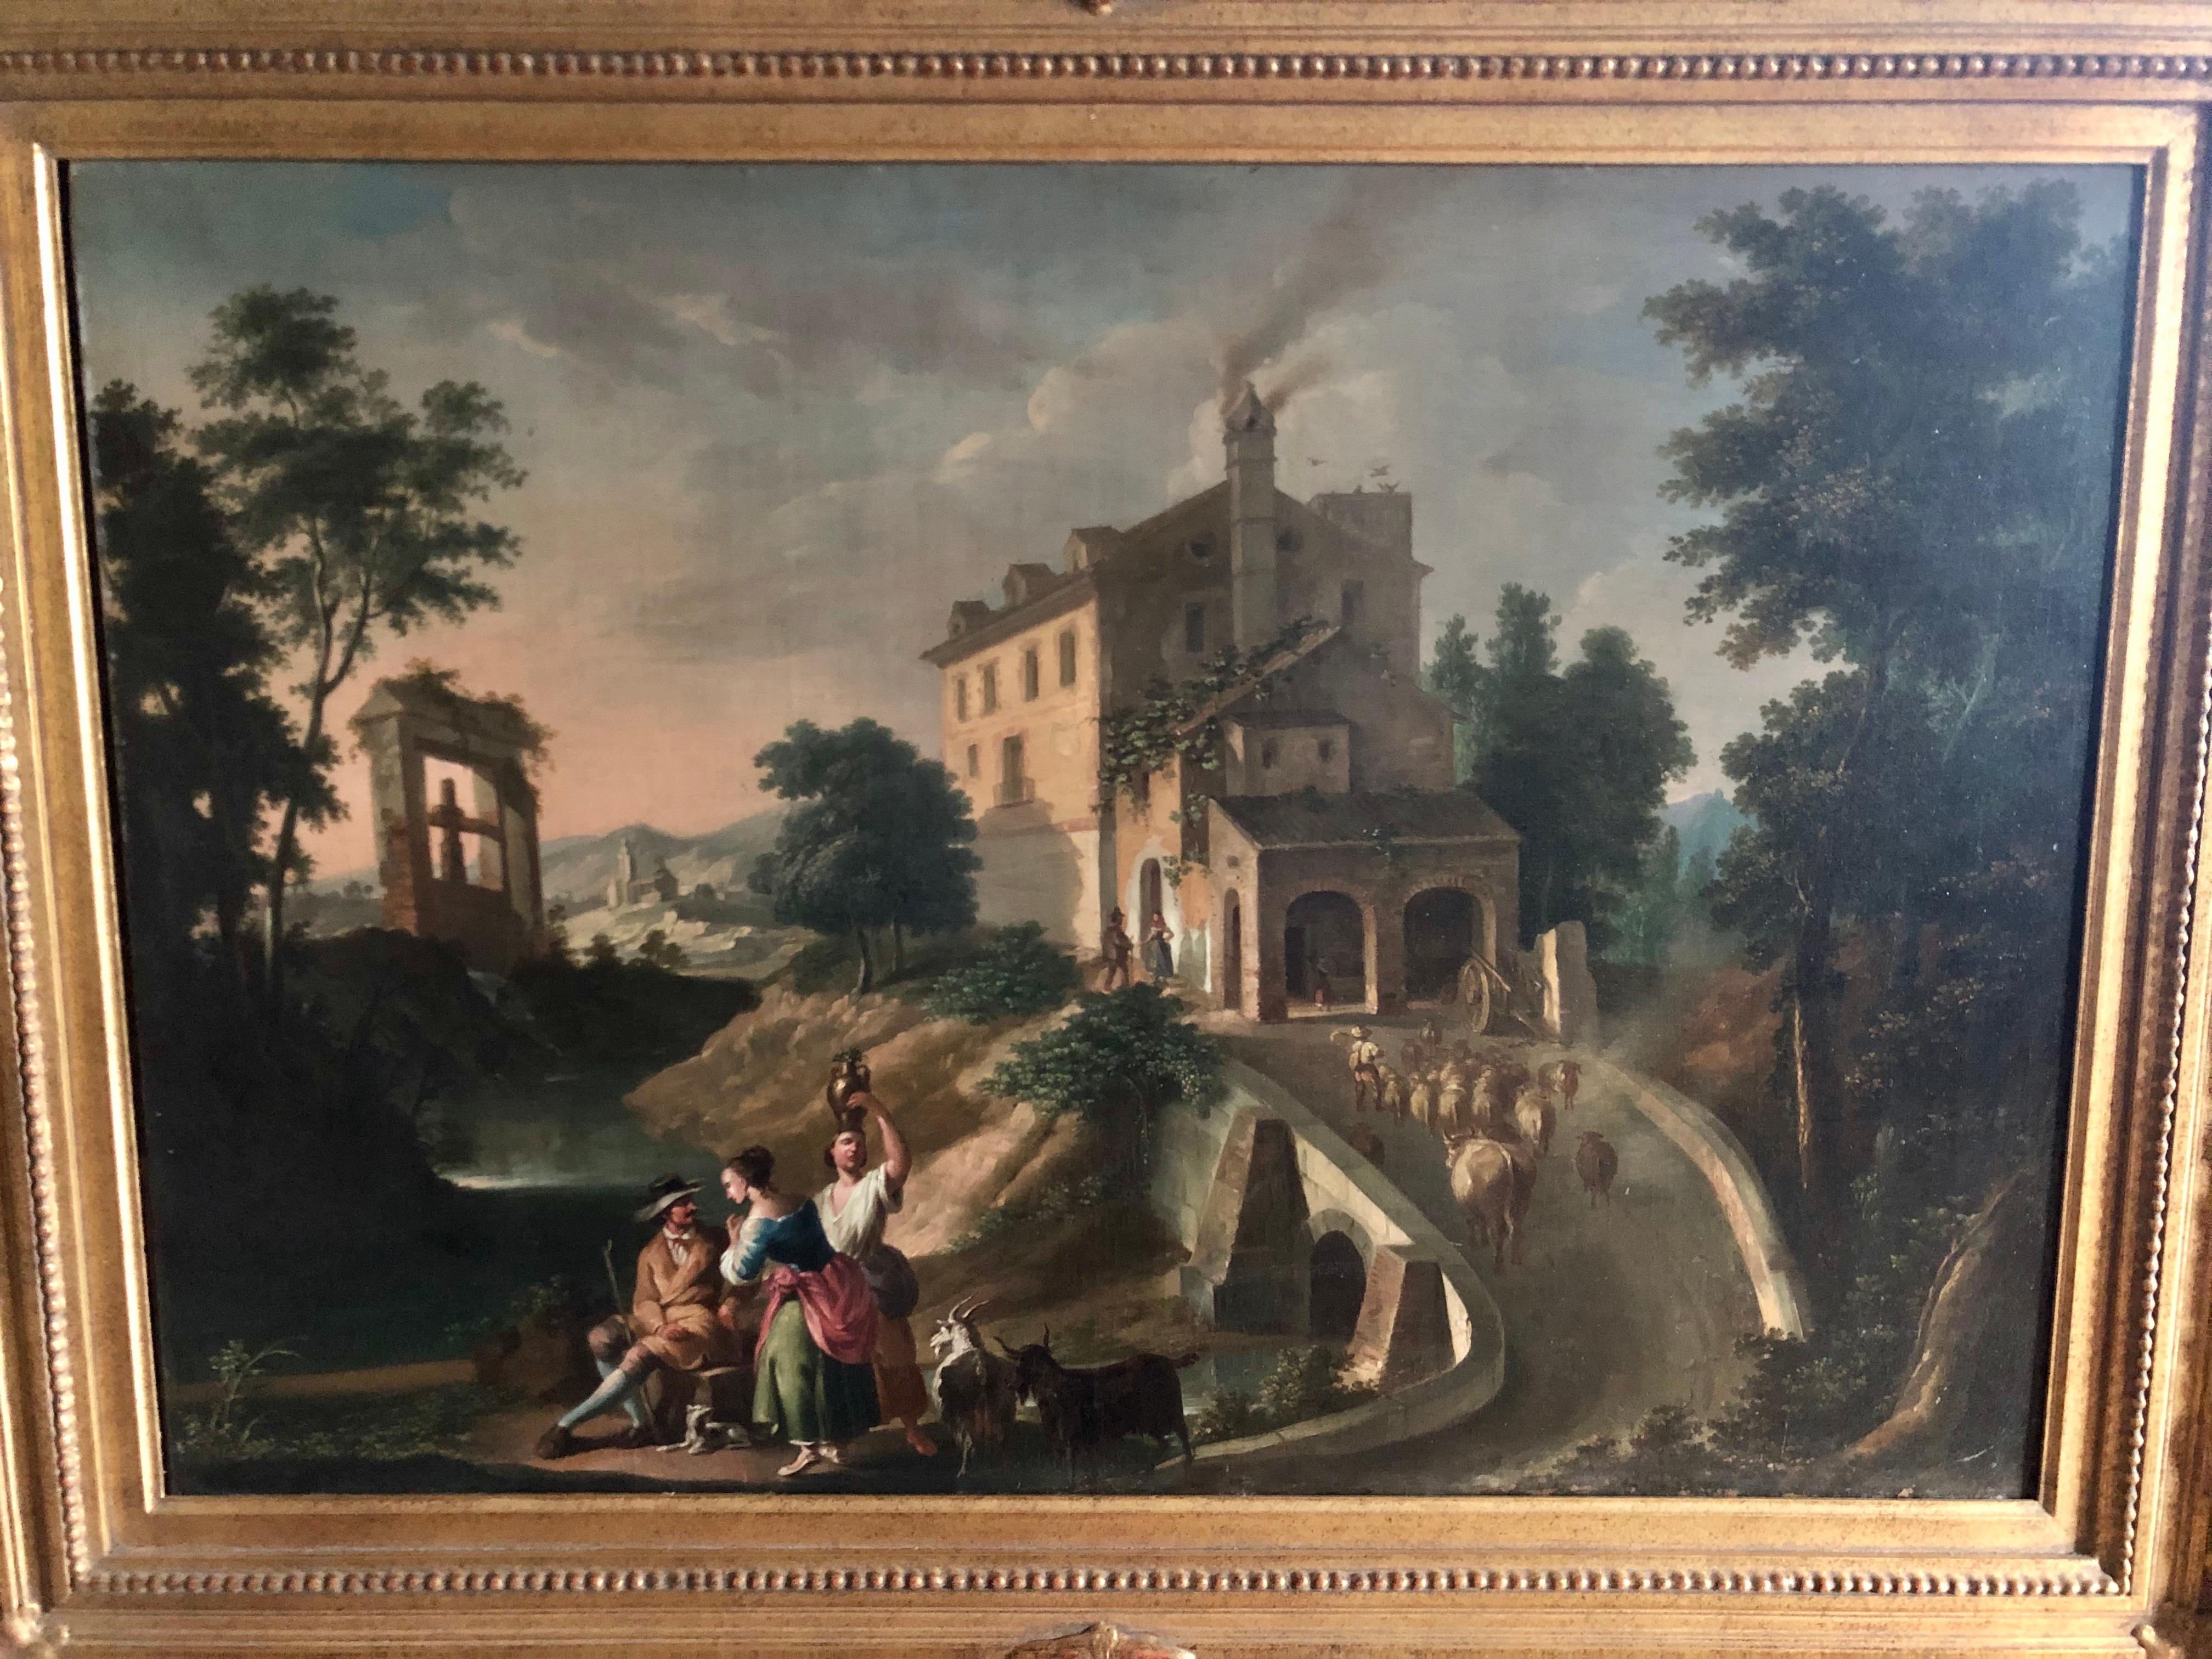 Unknown Spanish Artist, 18th Century, “A pastoral scene” 4